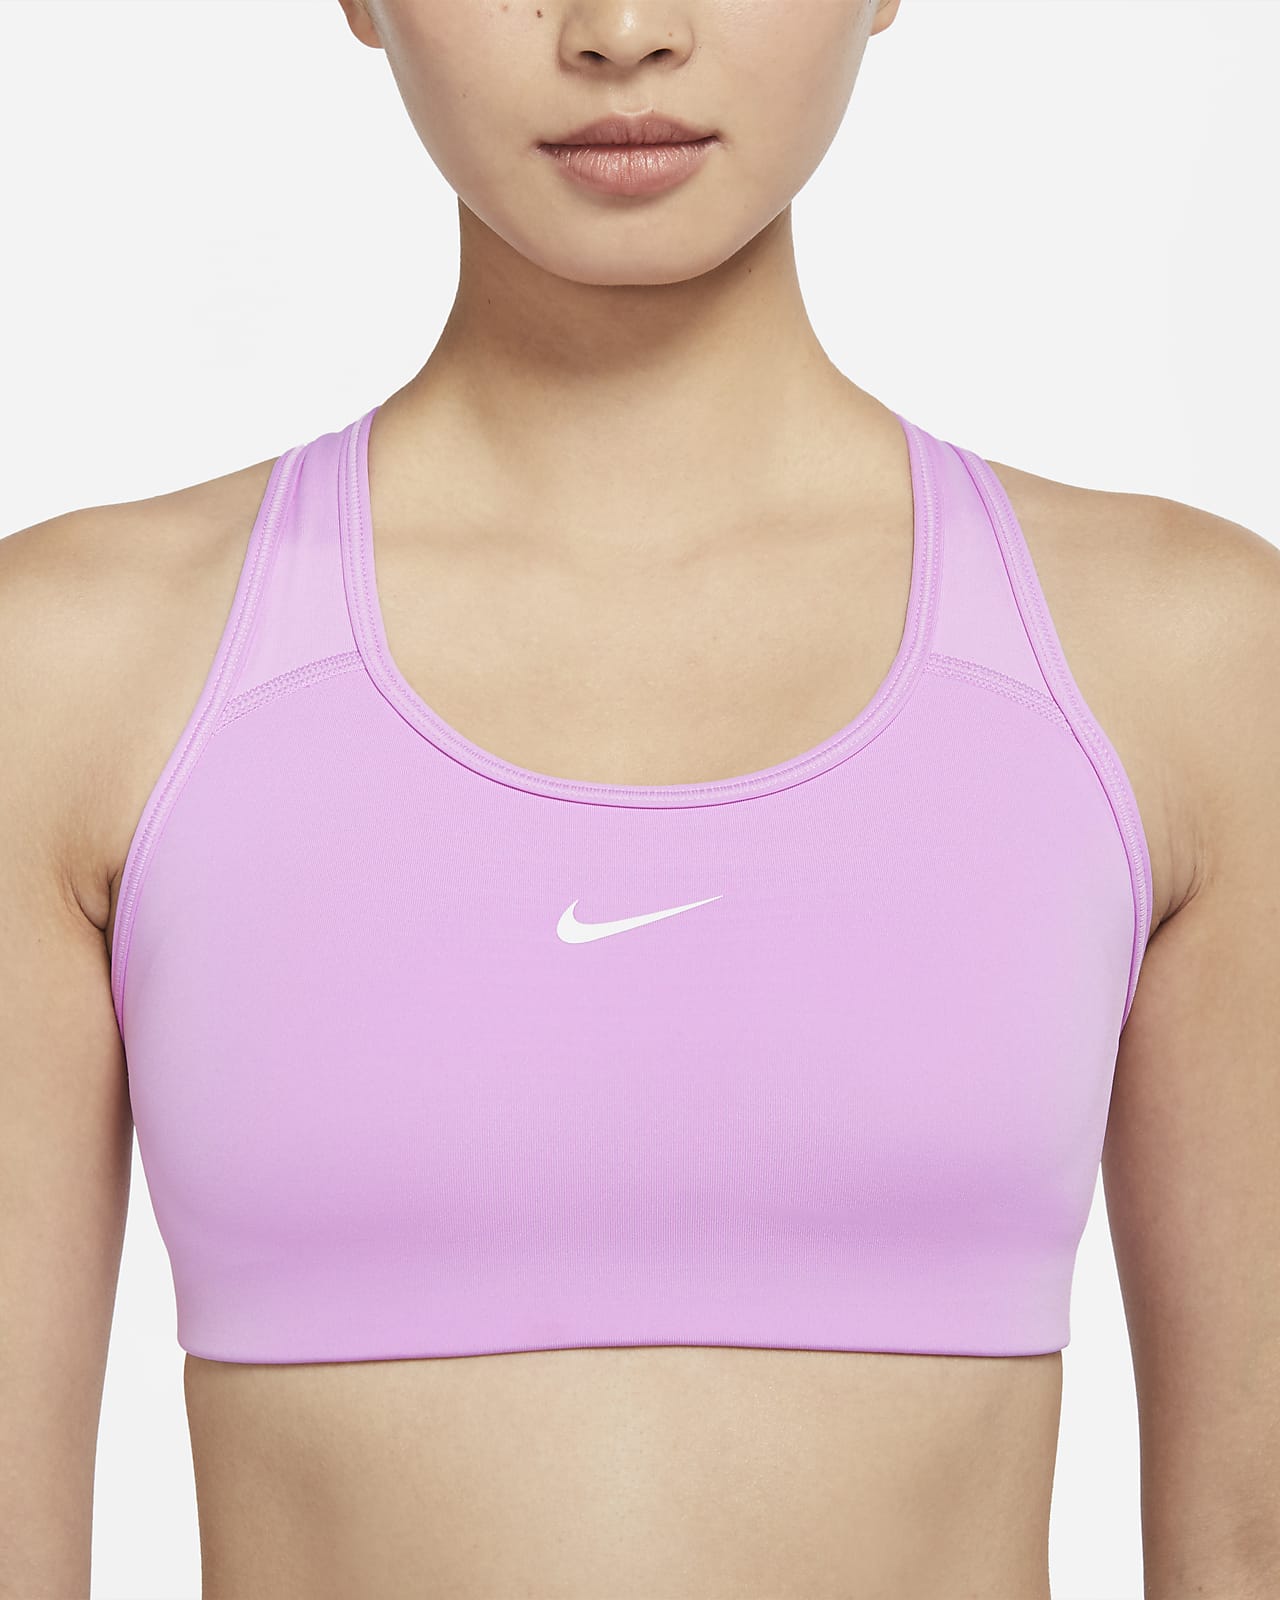 Топ Nike Women's Victory Compression Sports Bra , цвет: оранжевый,  NI464EWCAC28 — купить в интернет-магазине Lamoda